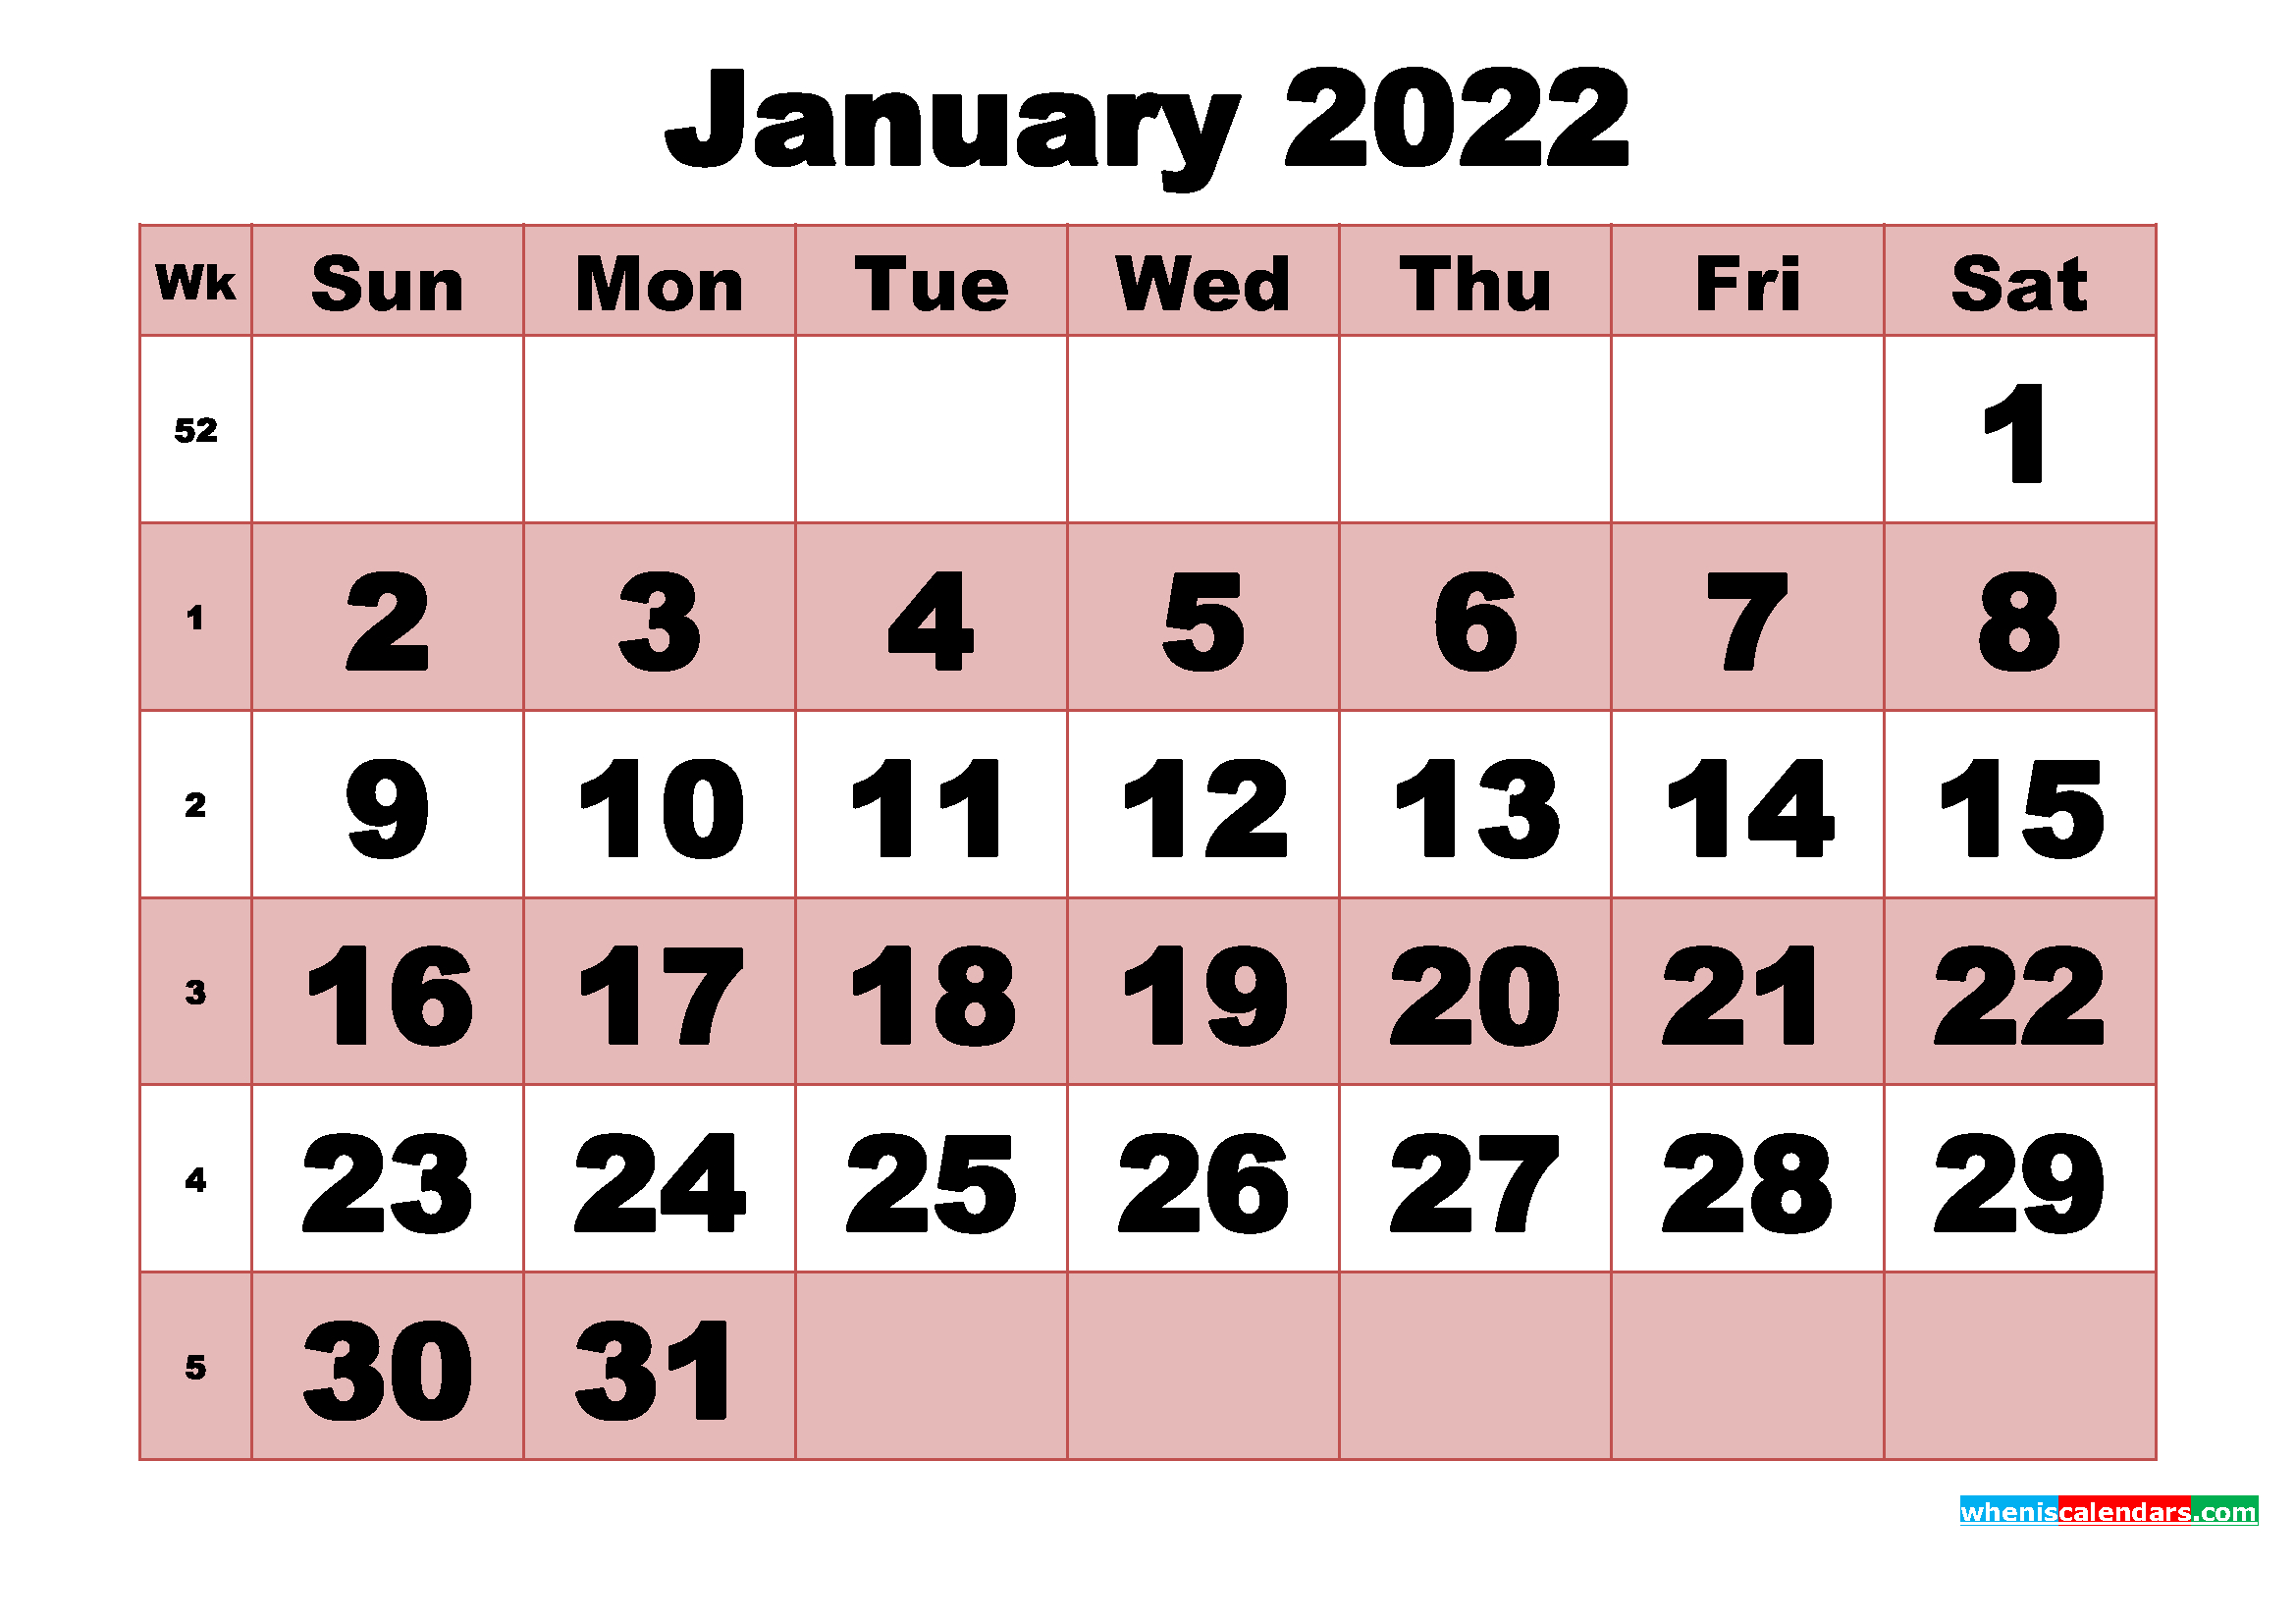 Free Printable Monthly Calendar January 2022